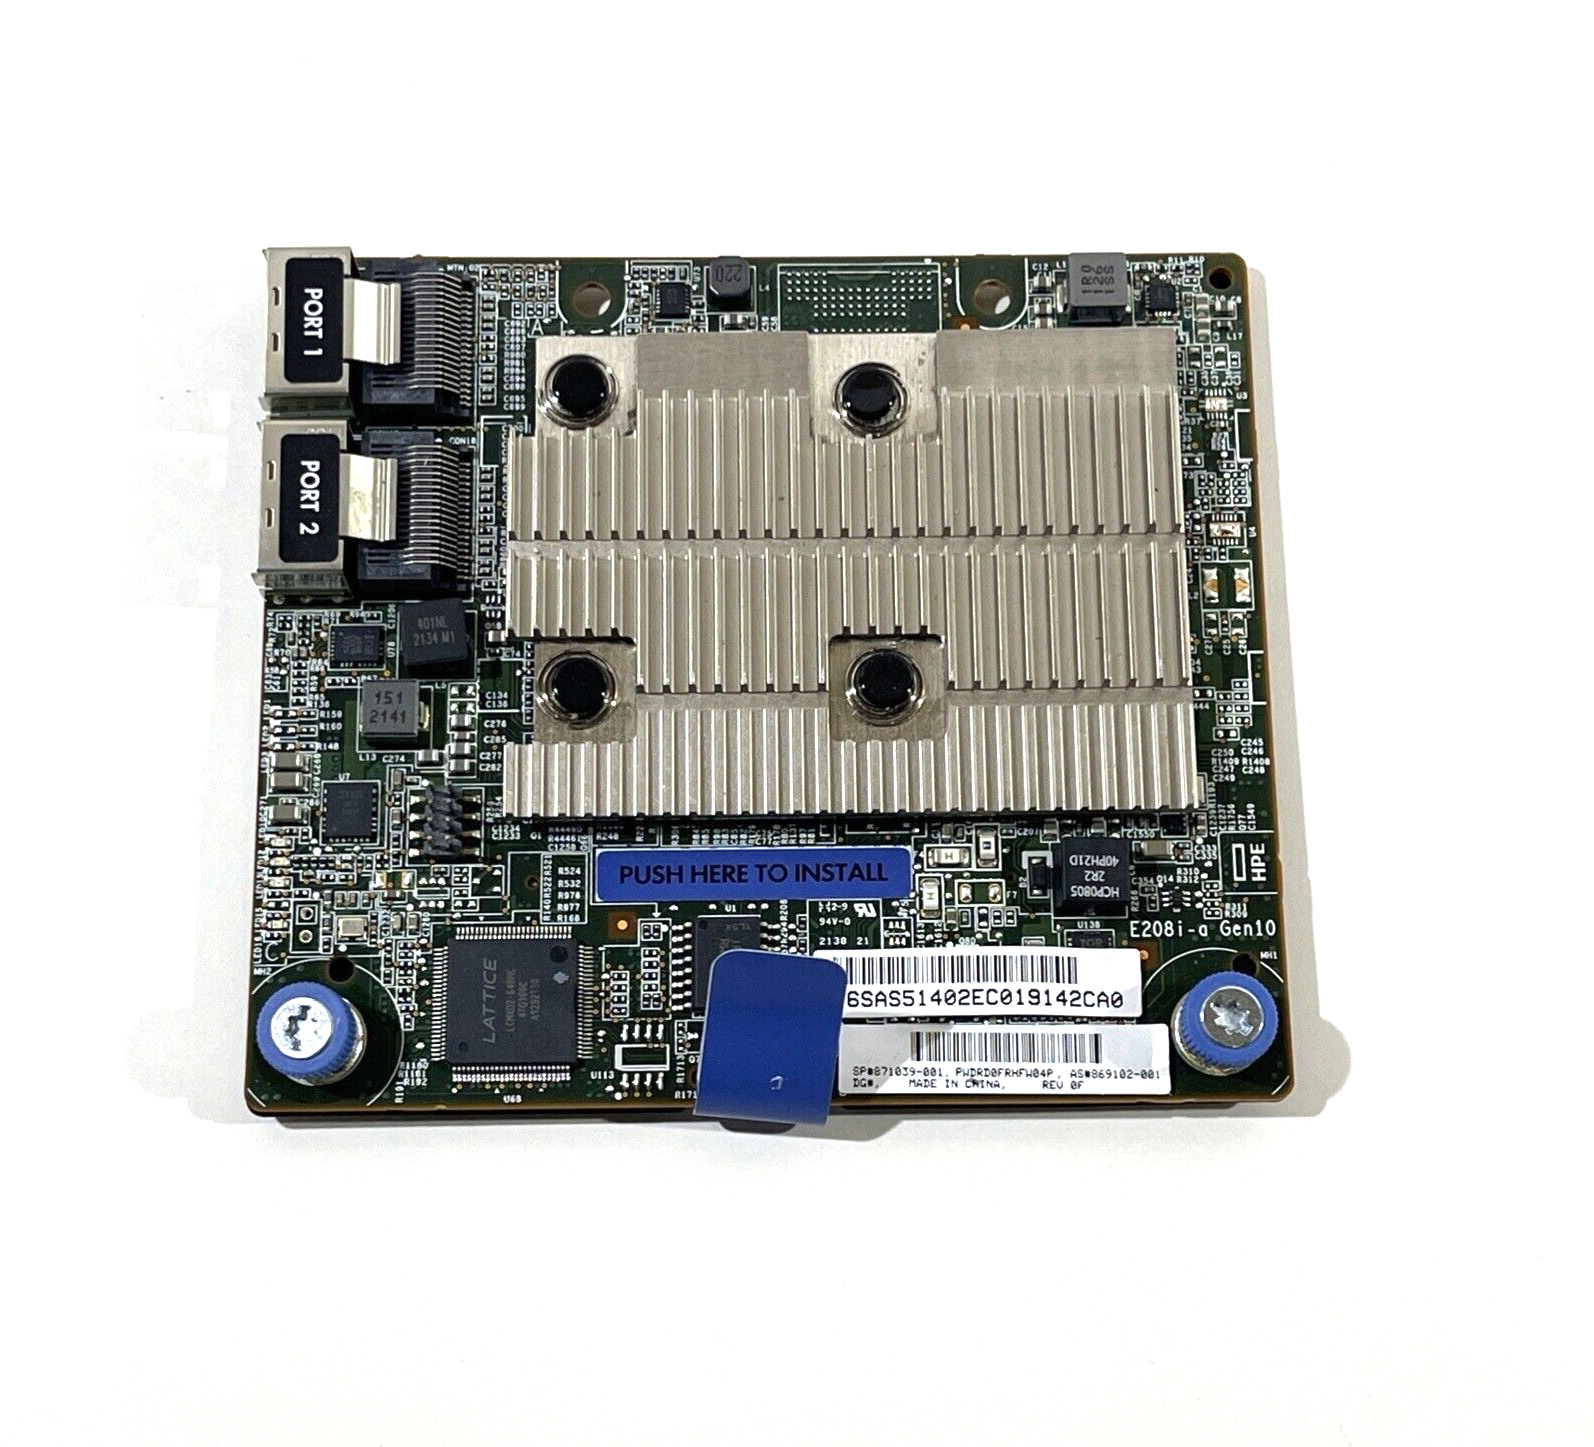 871039-001 HPE Smart Array E208i-a SR Gen10 Storage Controller (RAID) 869102-001